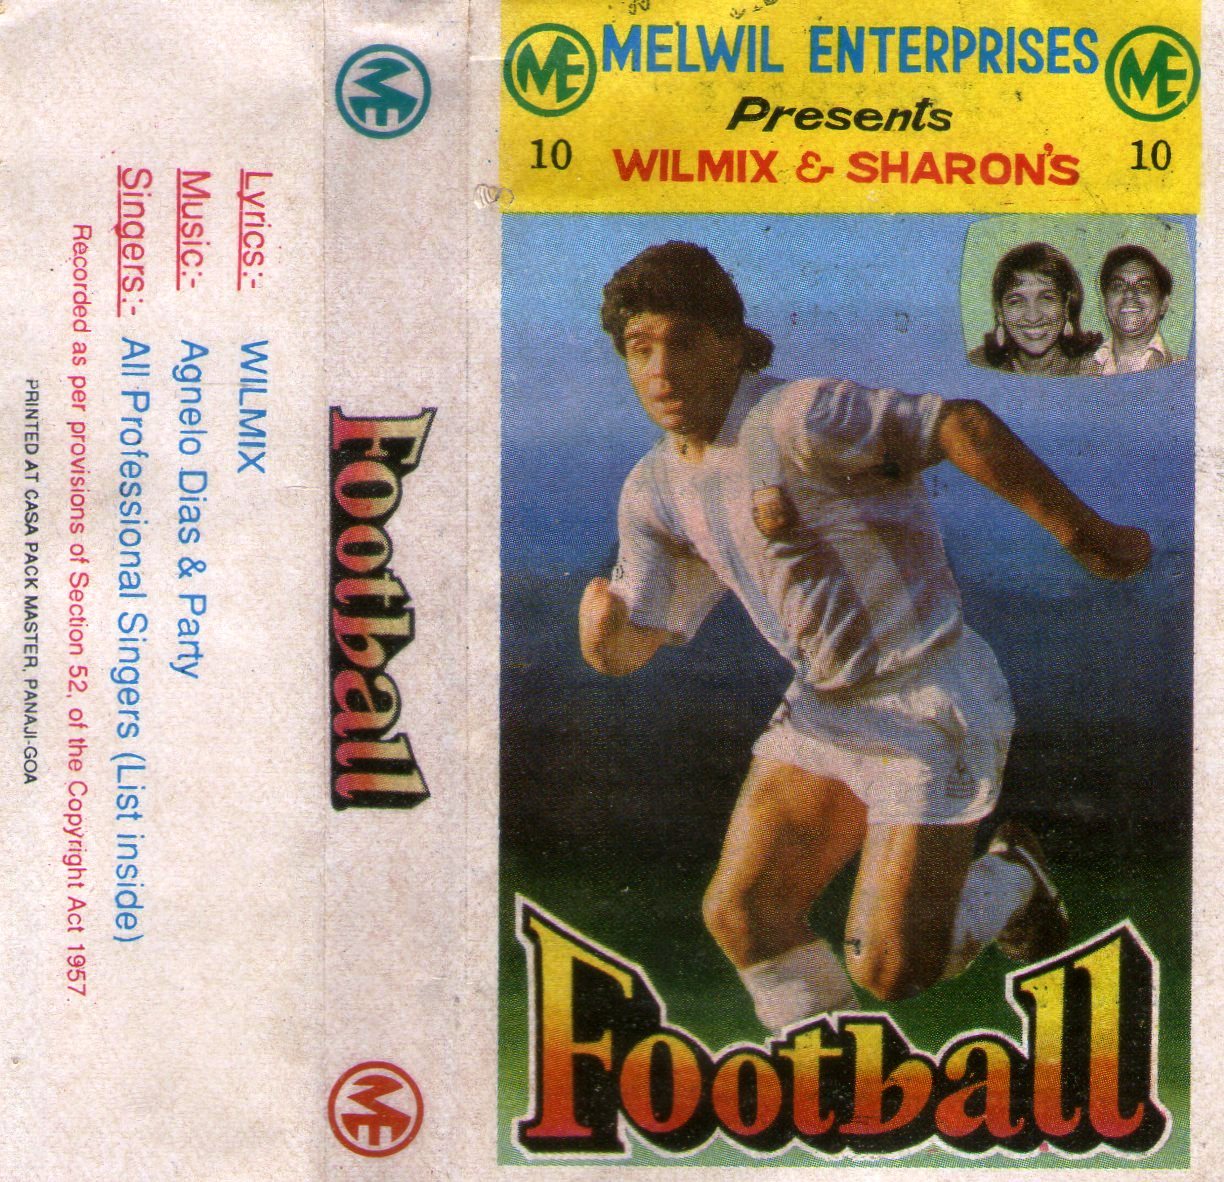 15. FOOTBALL – 1990